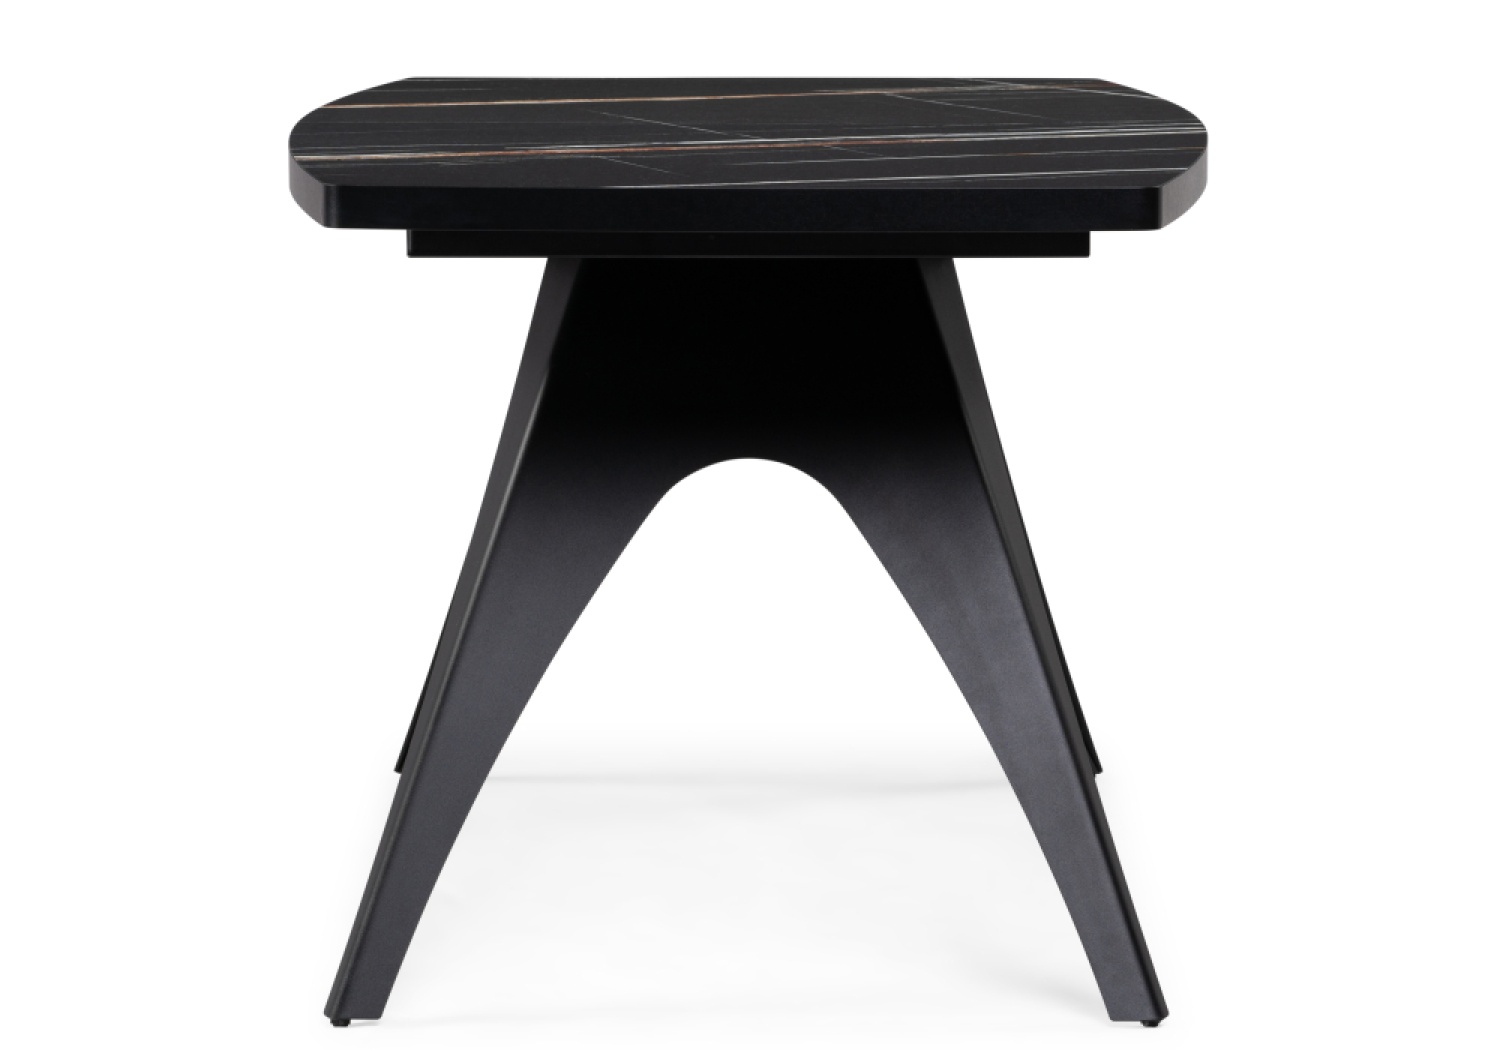 Стеклянный стол Лардж 160(205)х90х76 sahara noir / черный